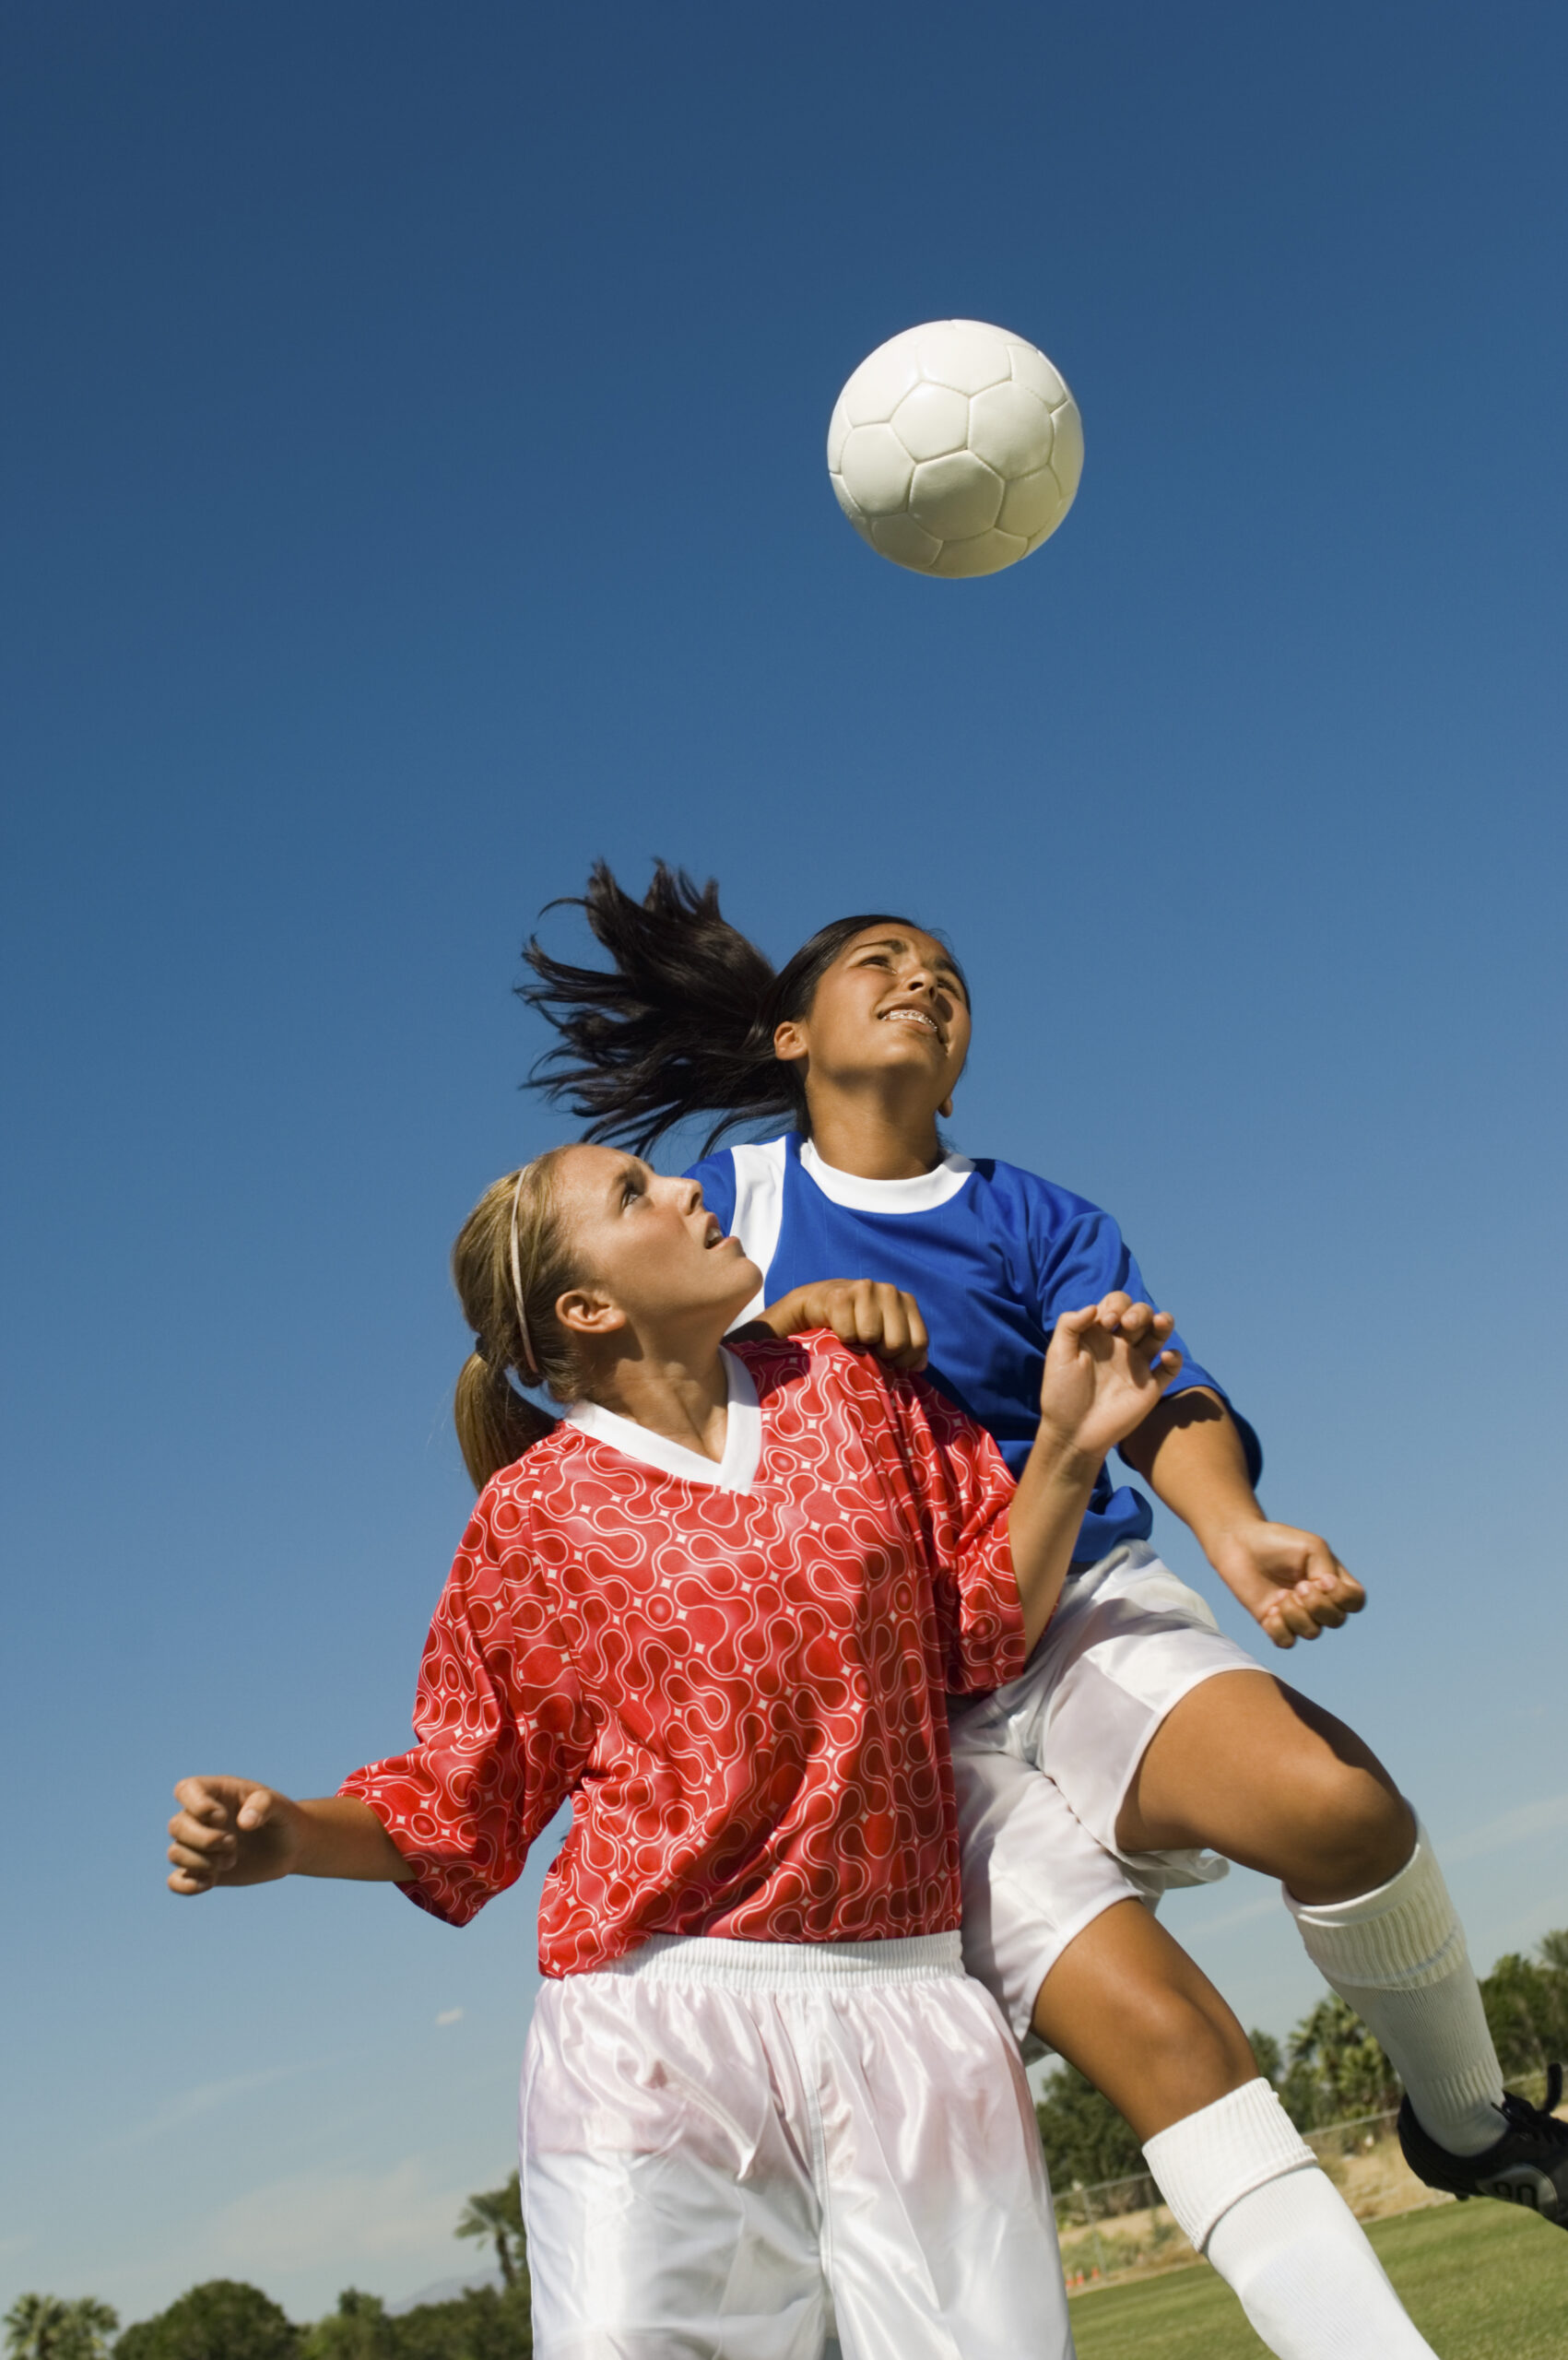 Heading a soccer ball might hurt women’s brains more than men’s